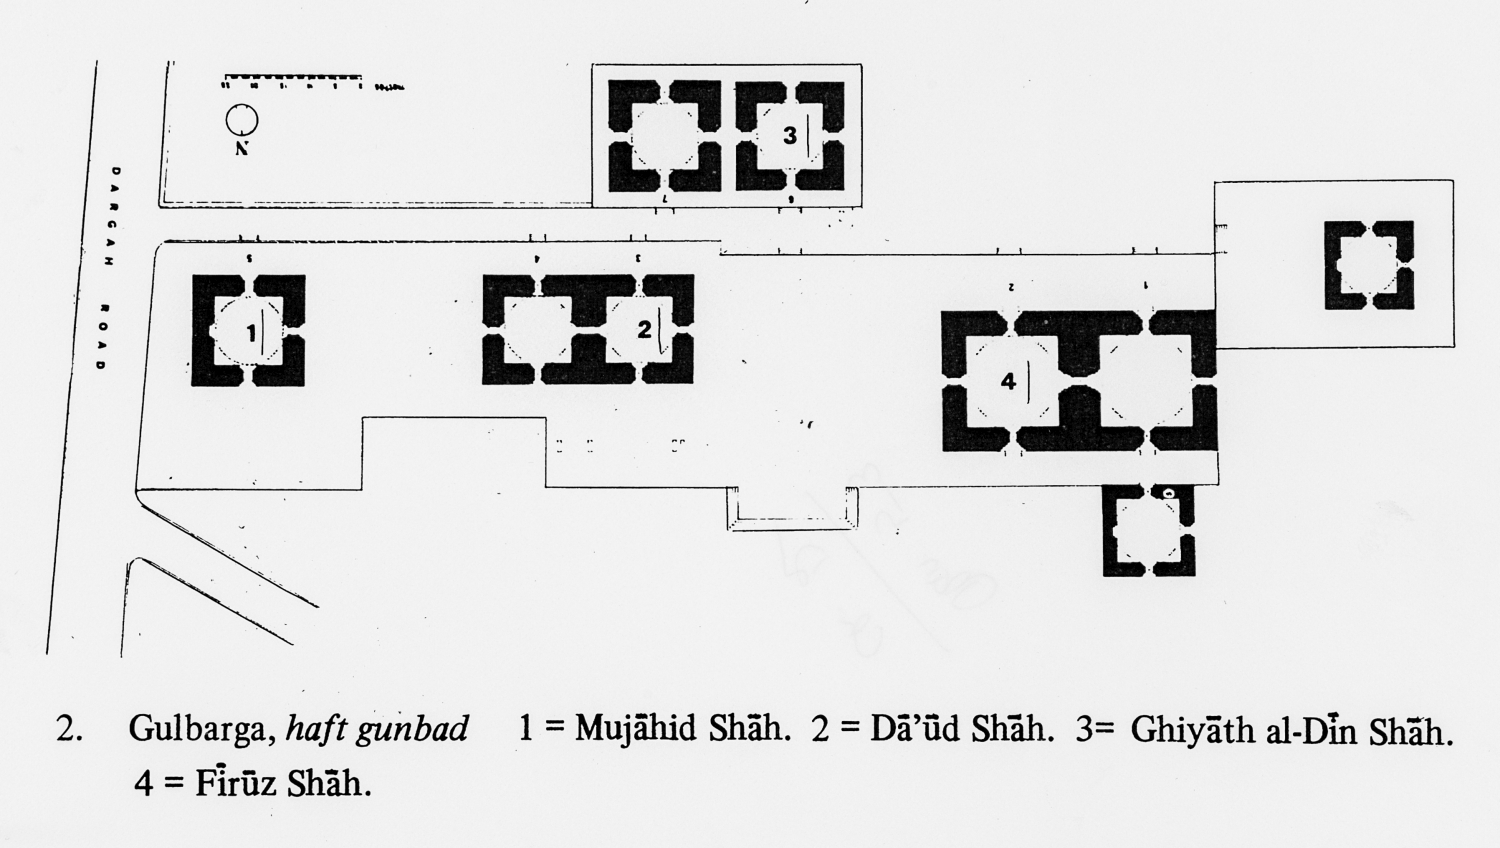 Site plan, with plan of 4 tombs: Mujahid Shah, Da'ud Shah, Ghiyath al-Din Shah, Firuz Shah